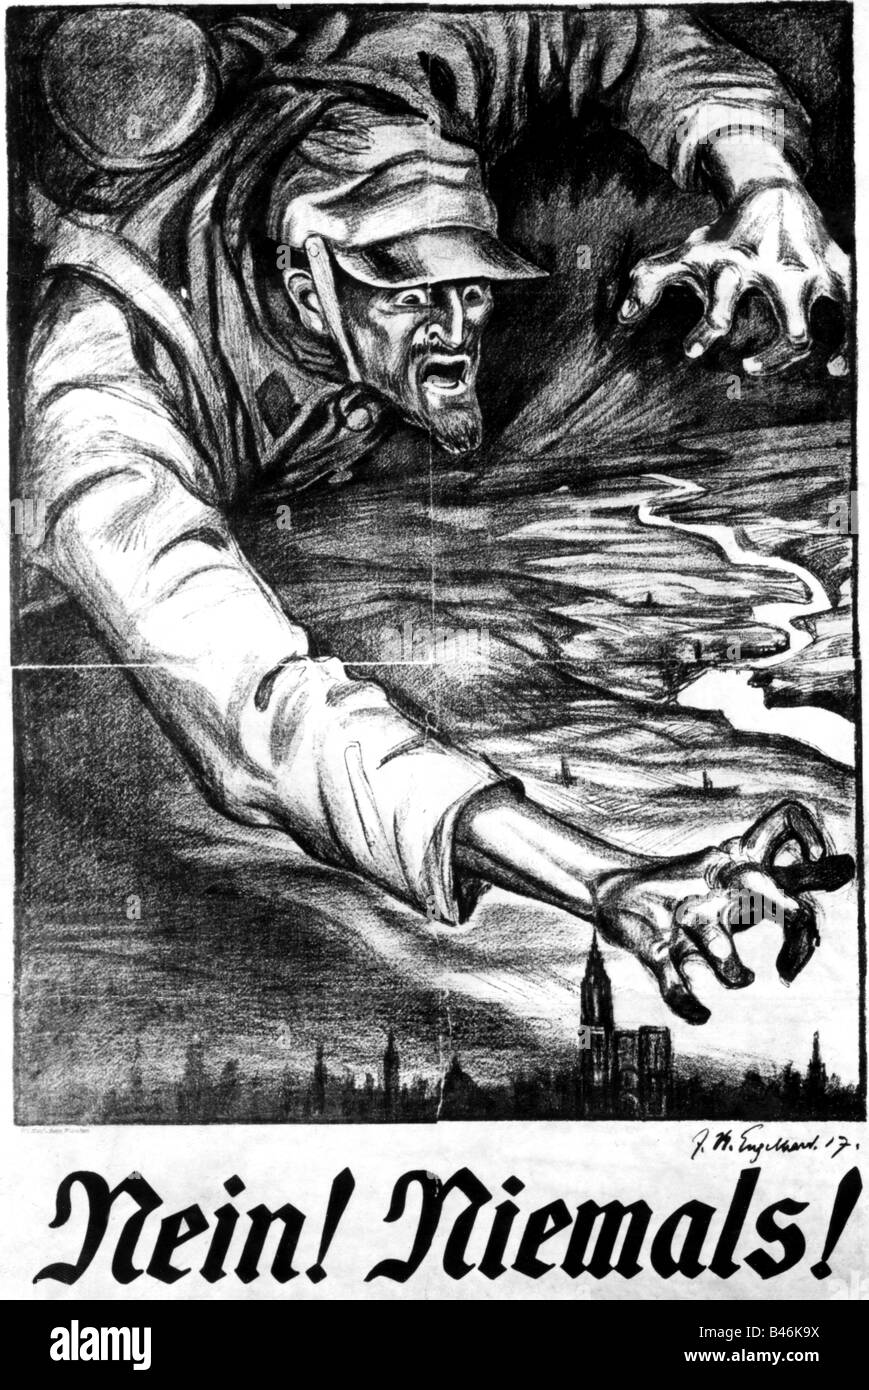 events, First World War / WWI, propaganda, poster 'Nein! Niemals!' (No! Never!), by J. K. Engelhard, Germany, 1917, Stock Photo